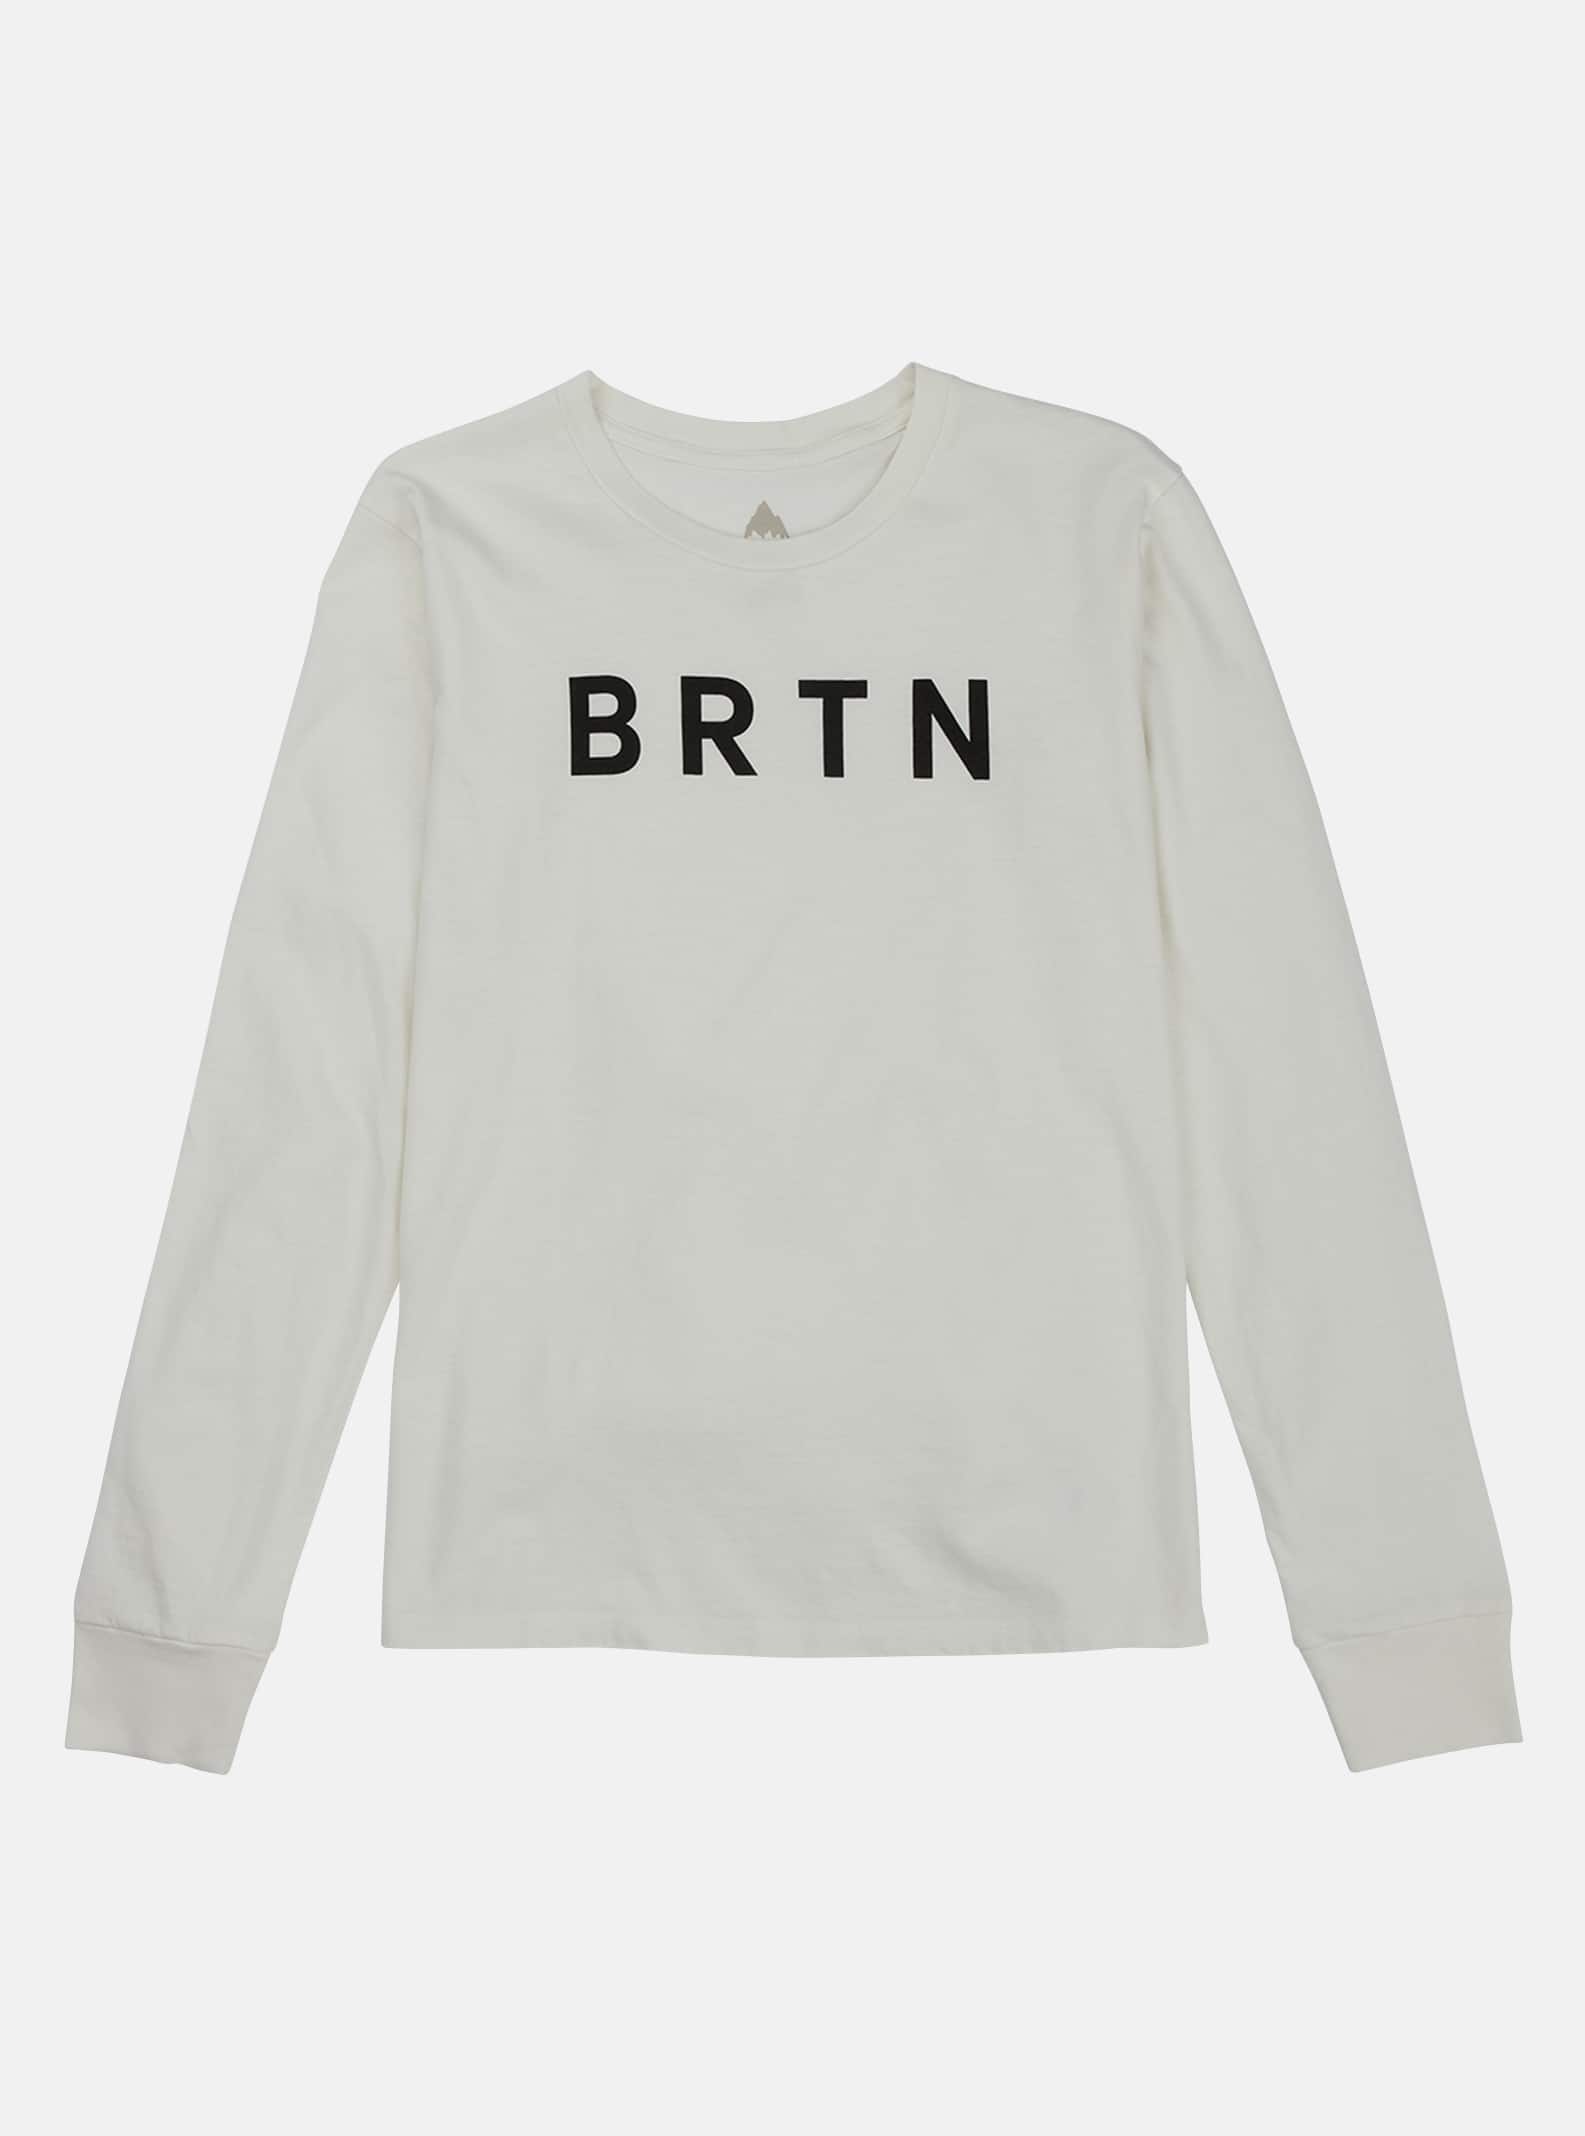 Burton BRTN långärmad t-shirt för damer, Stout White, XXL